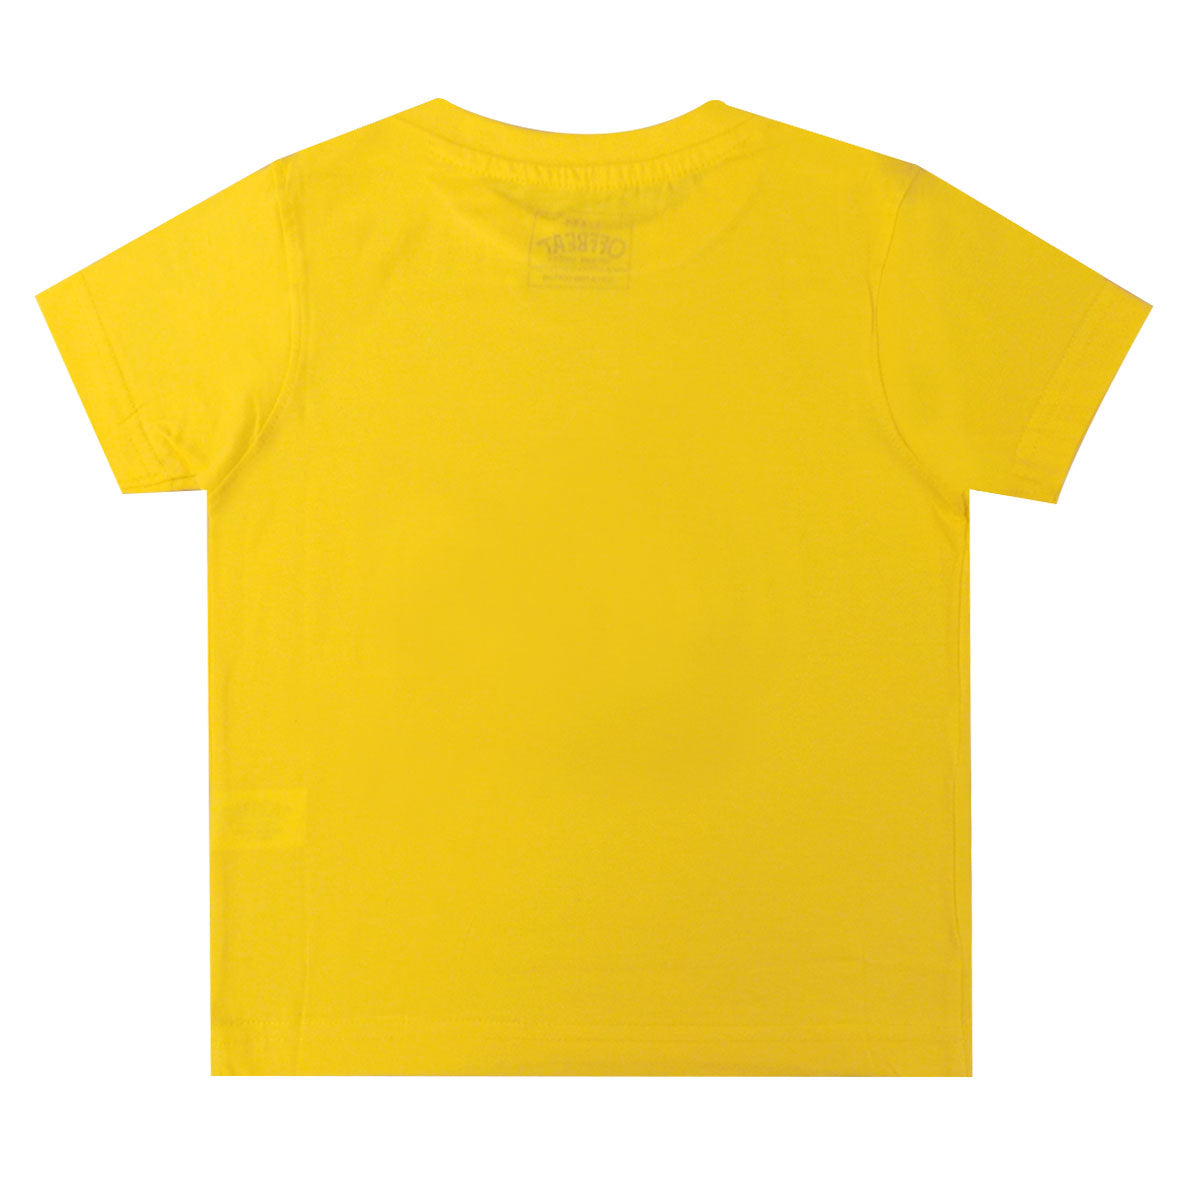 Spread Love - Premium Round Neck Cotton Tees for Kids - Lemon Yellow